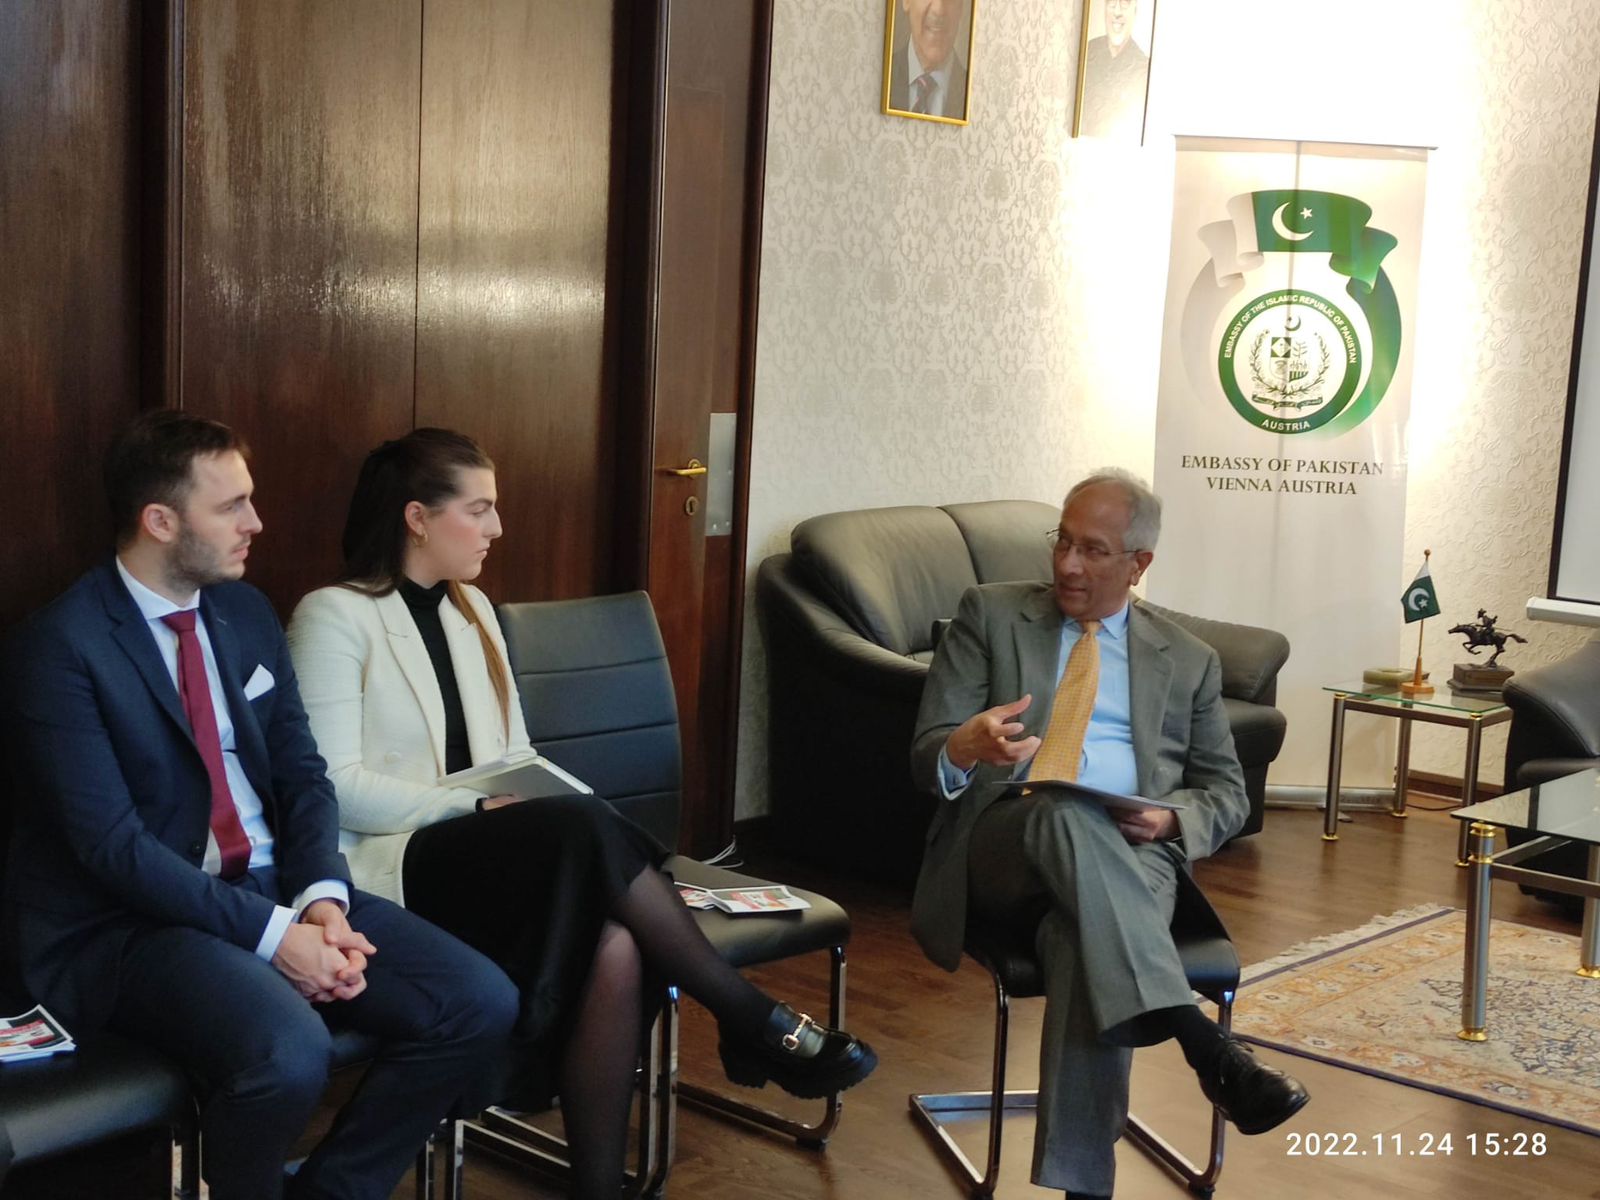 Ambassador of Pakistan to Austria addressing students at the event organized on November 24, 2022.